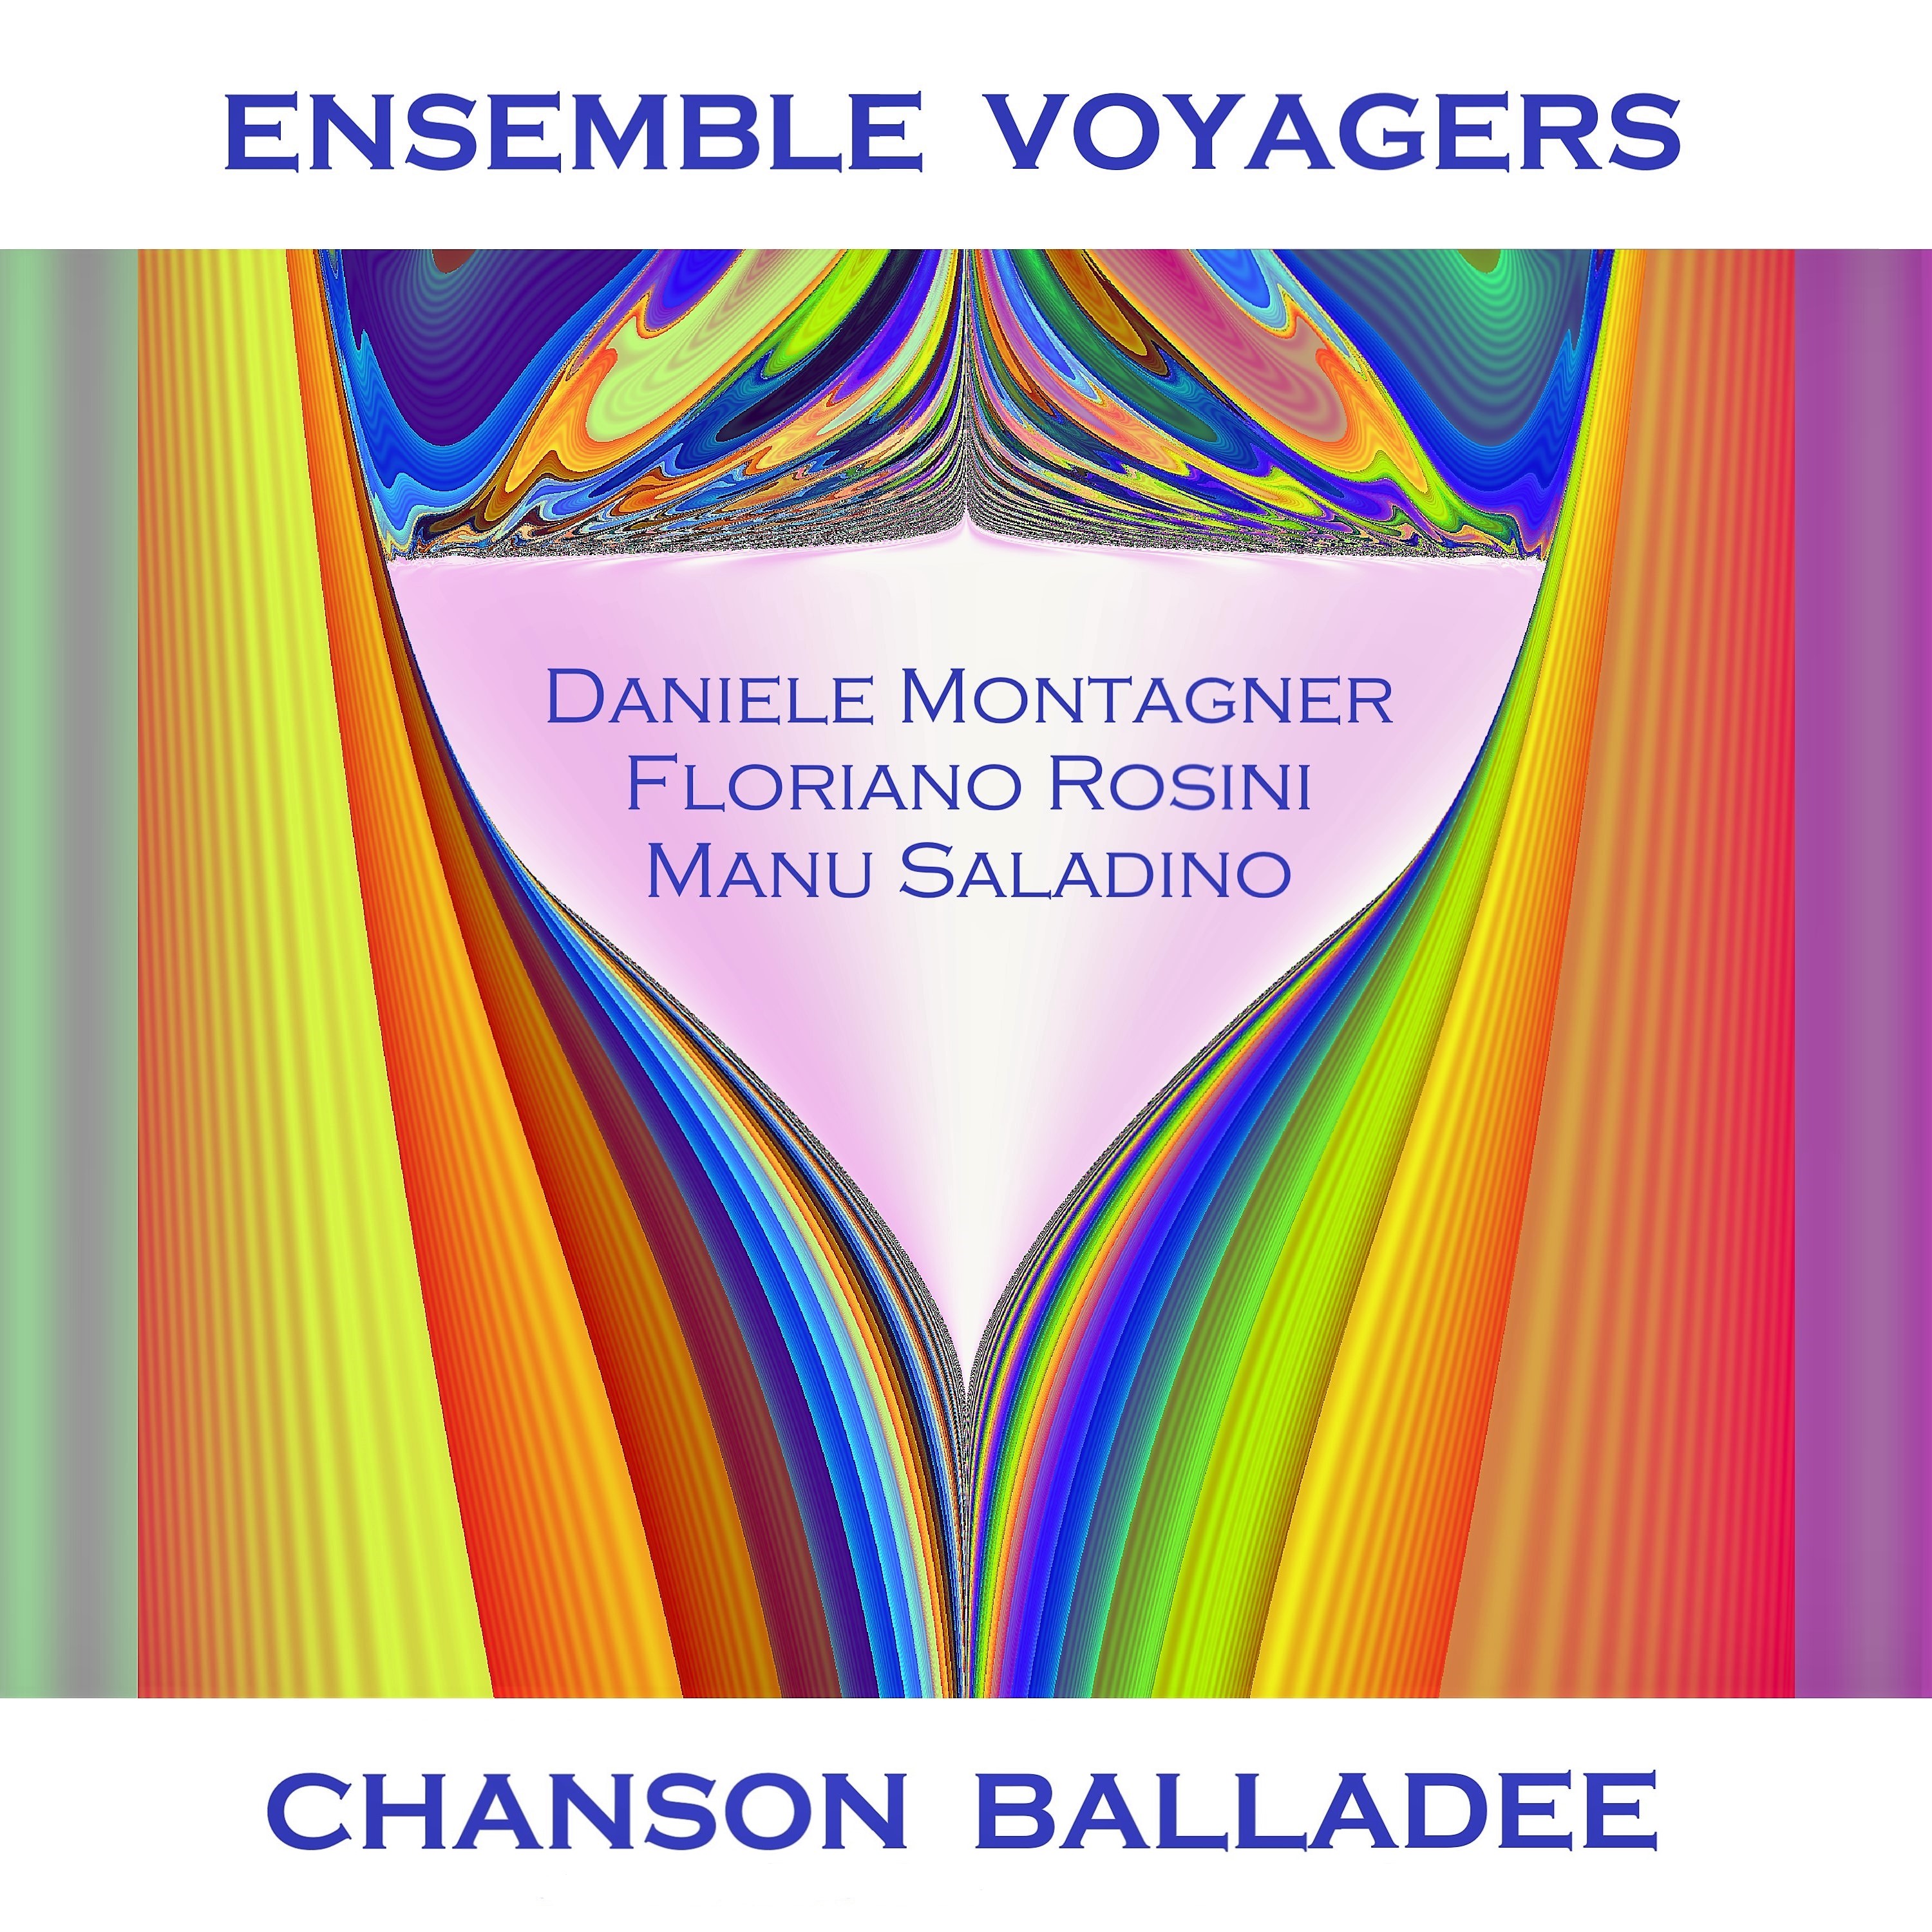 Daniele Montagner - Ensemble Voyagers Regala una Nuova Perla.